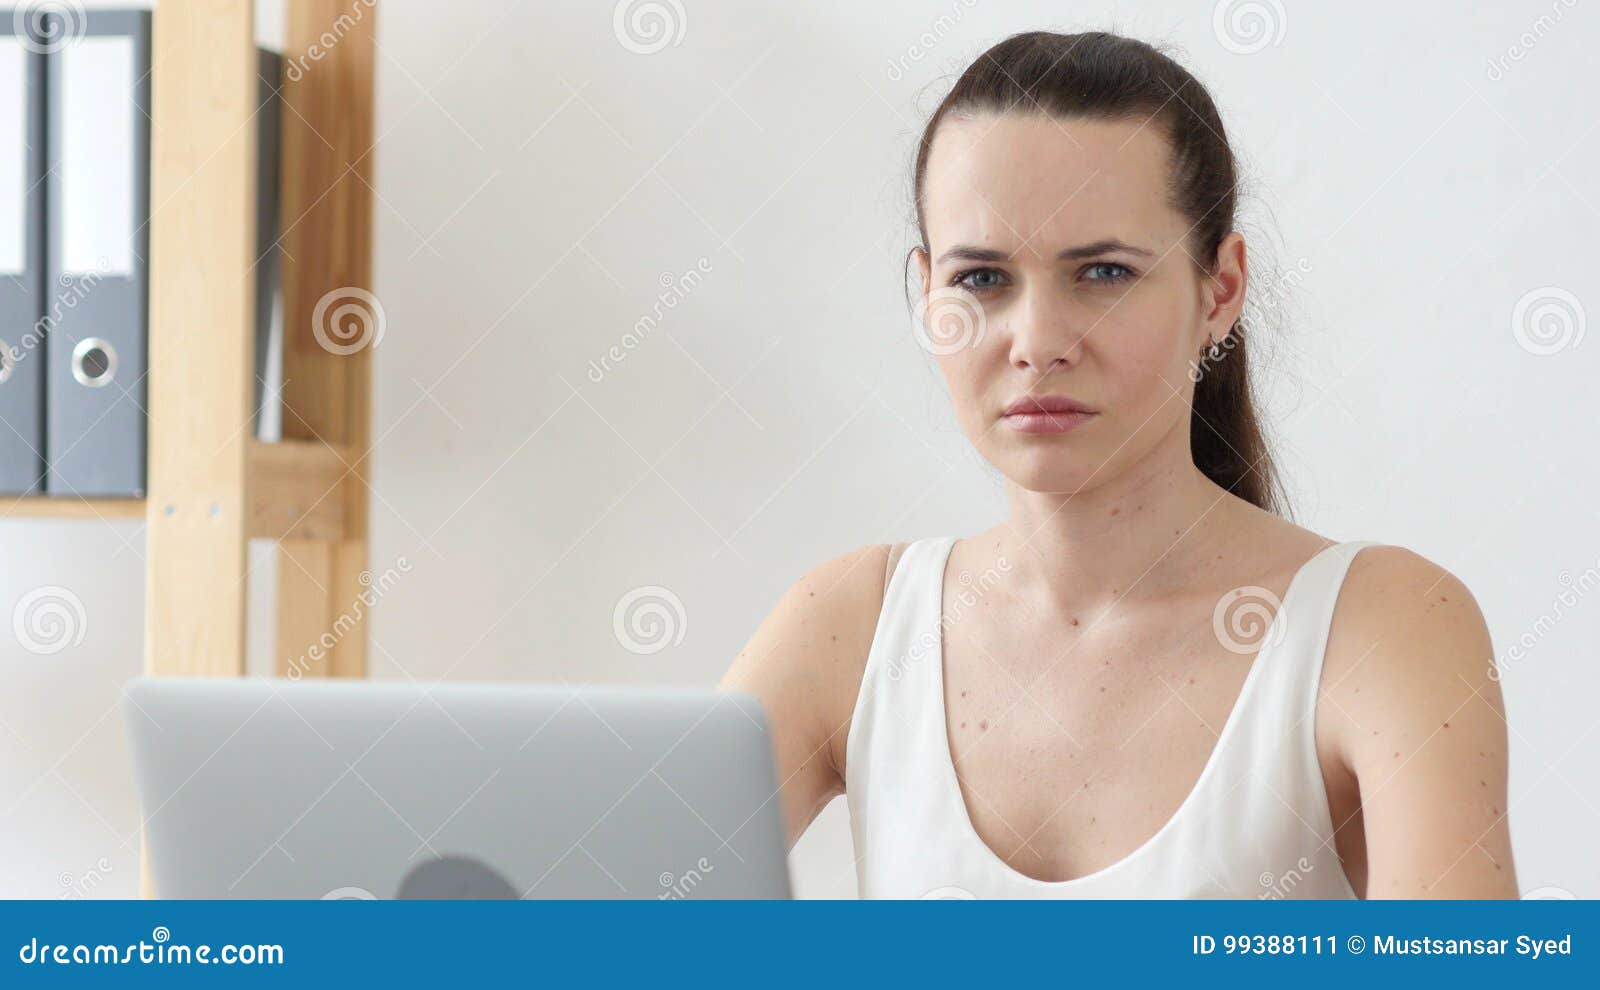 sad woman looking at camera at work in office